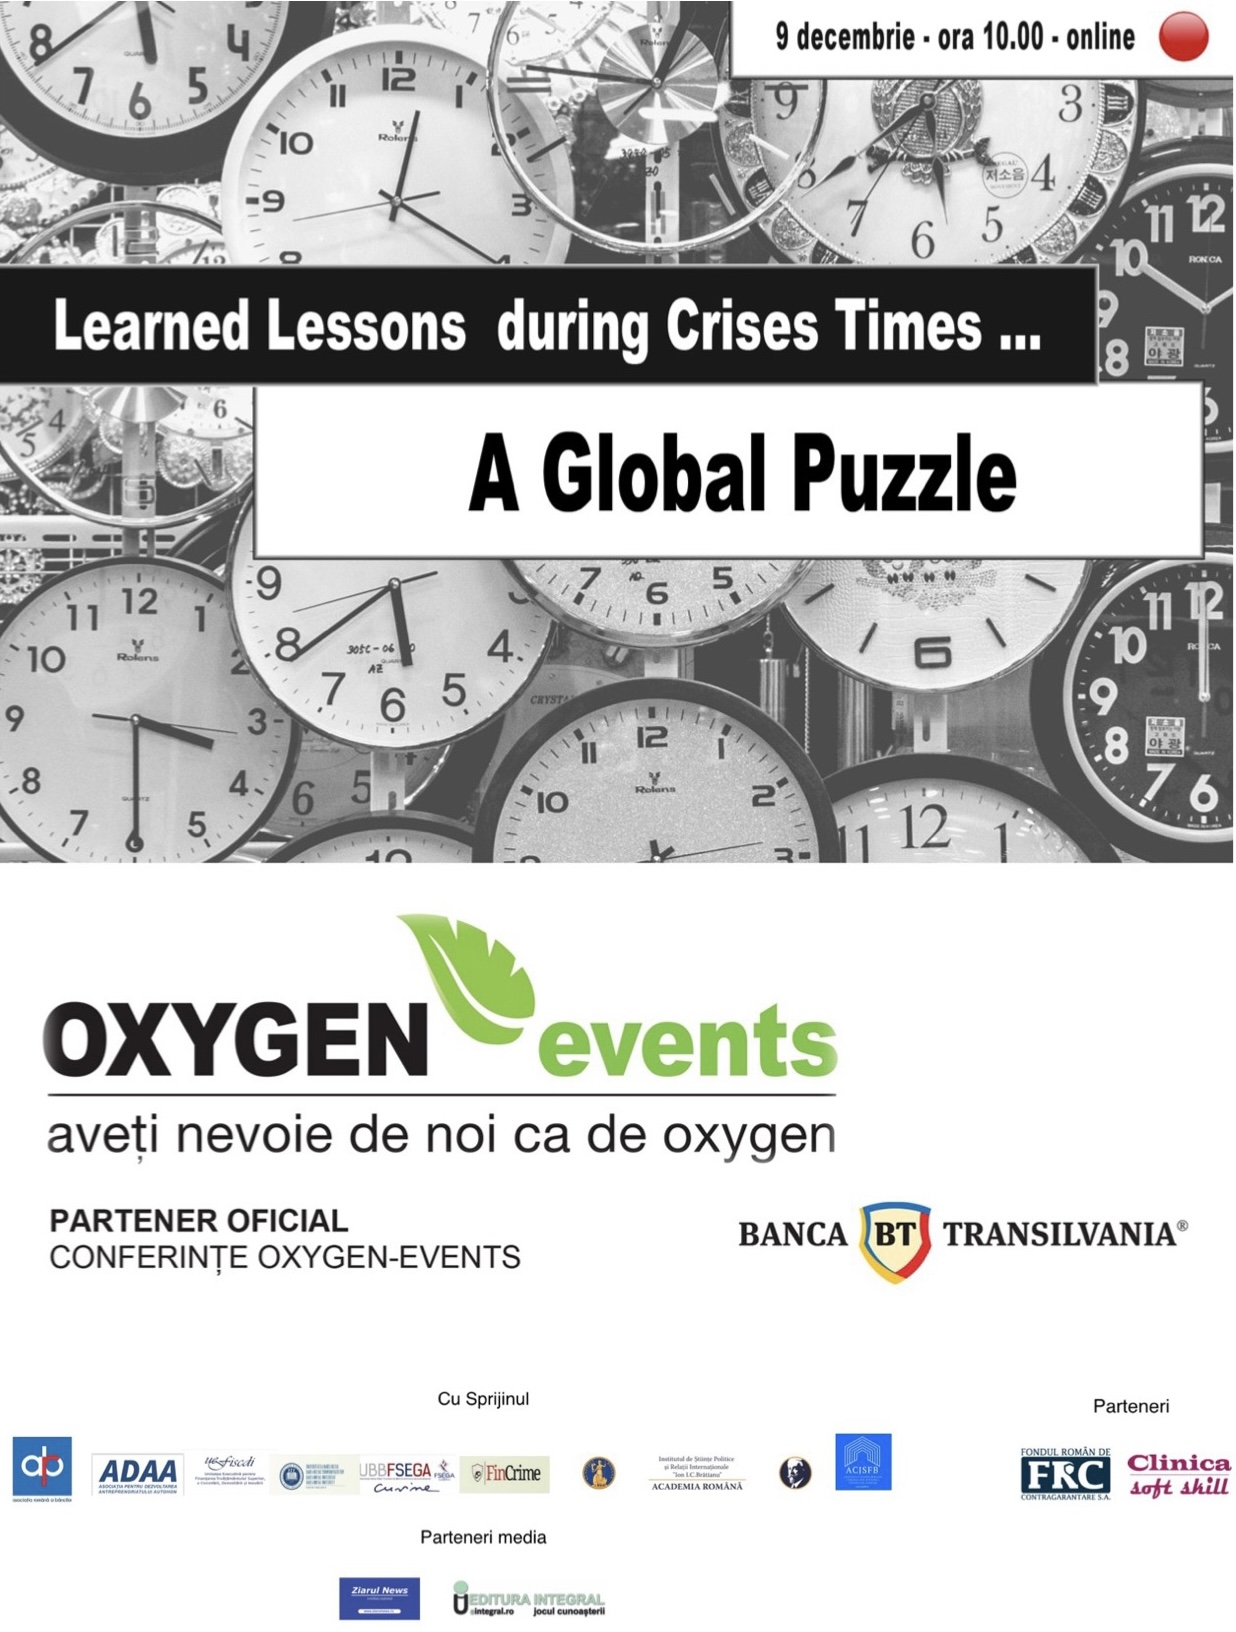 oxygen events 9 decembrie ora 10